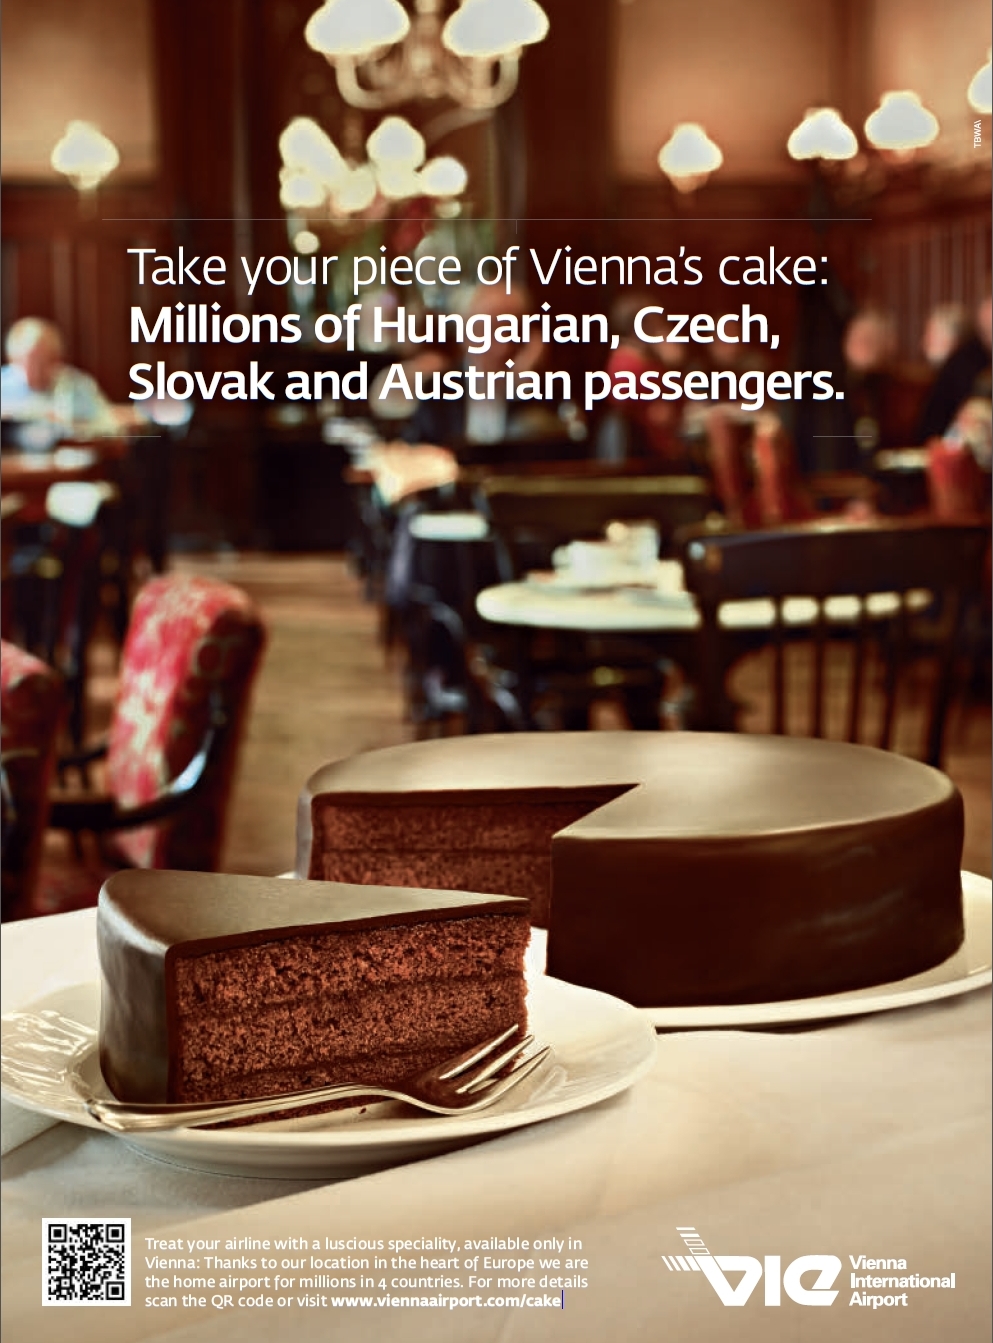 Take Your Piece of Vienna’s Cake